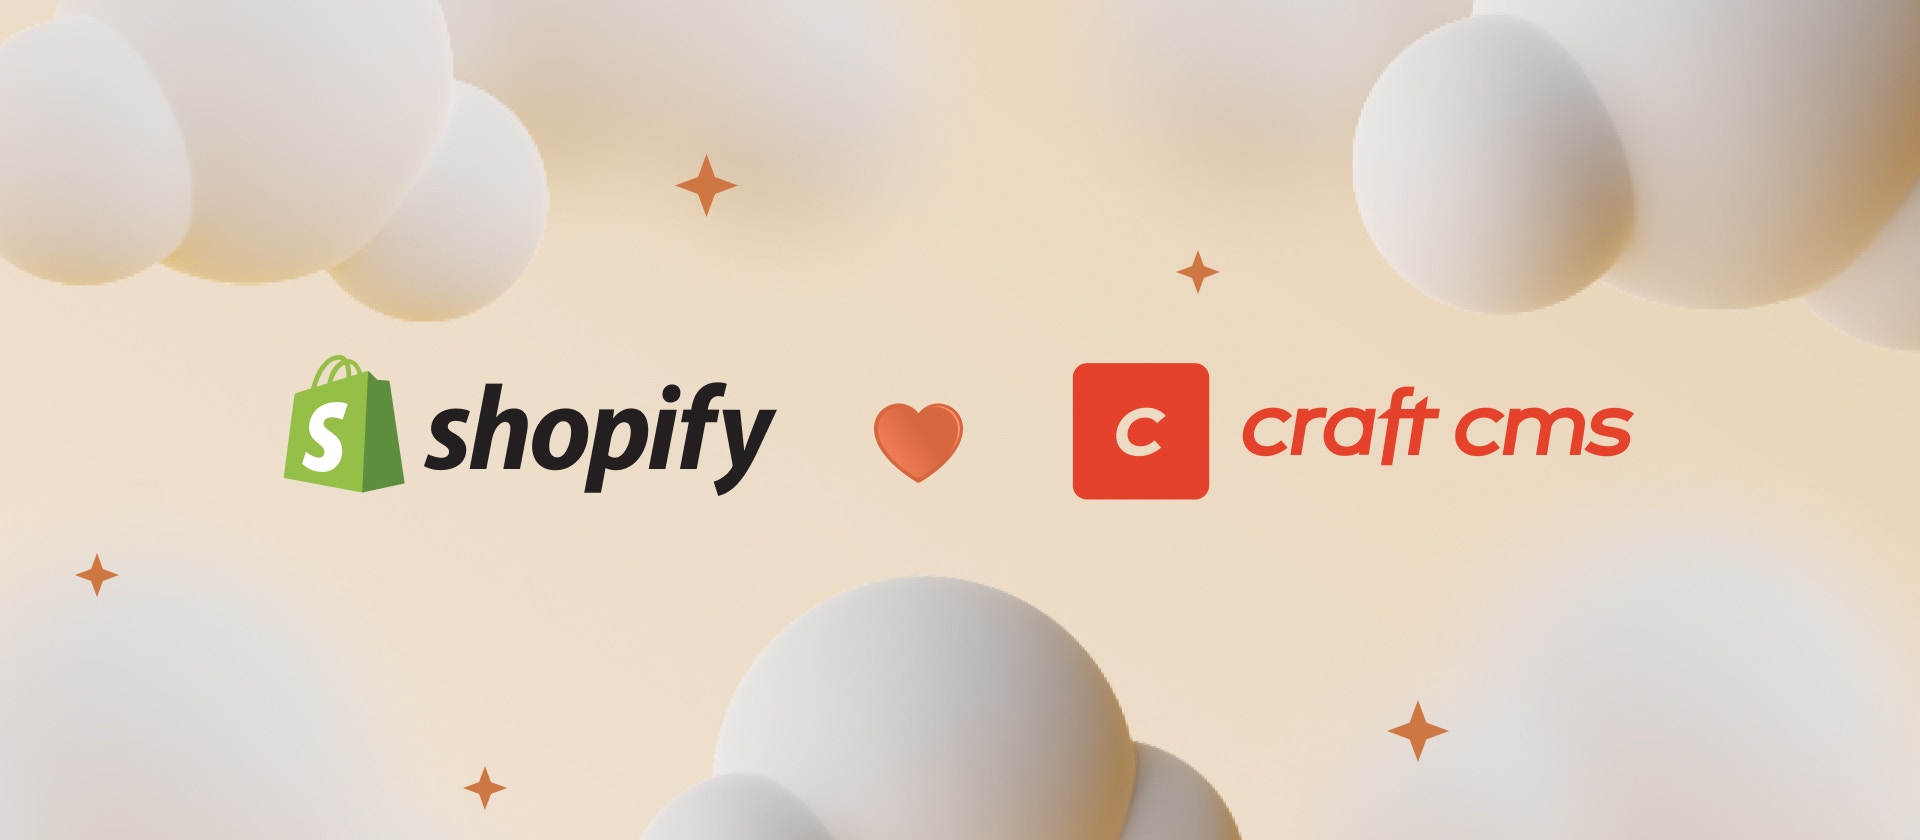 Shopify x craft cms image